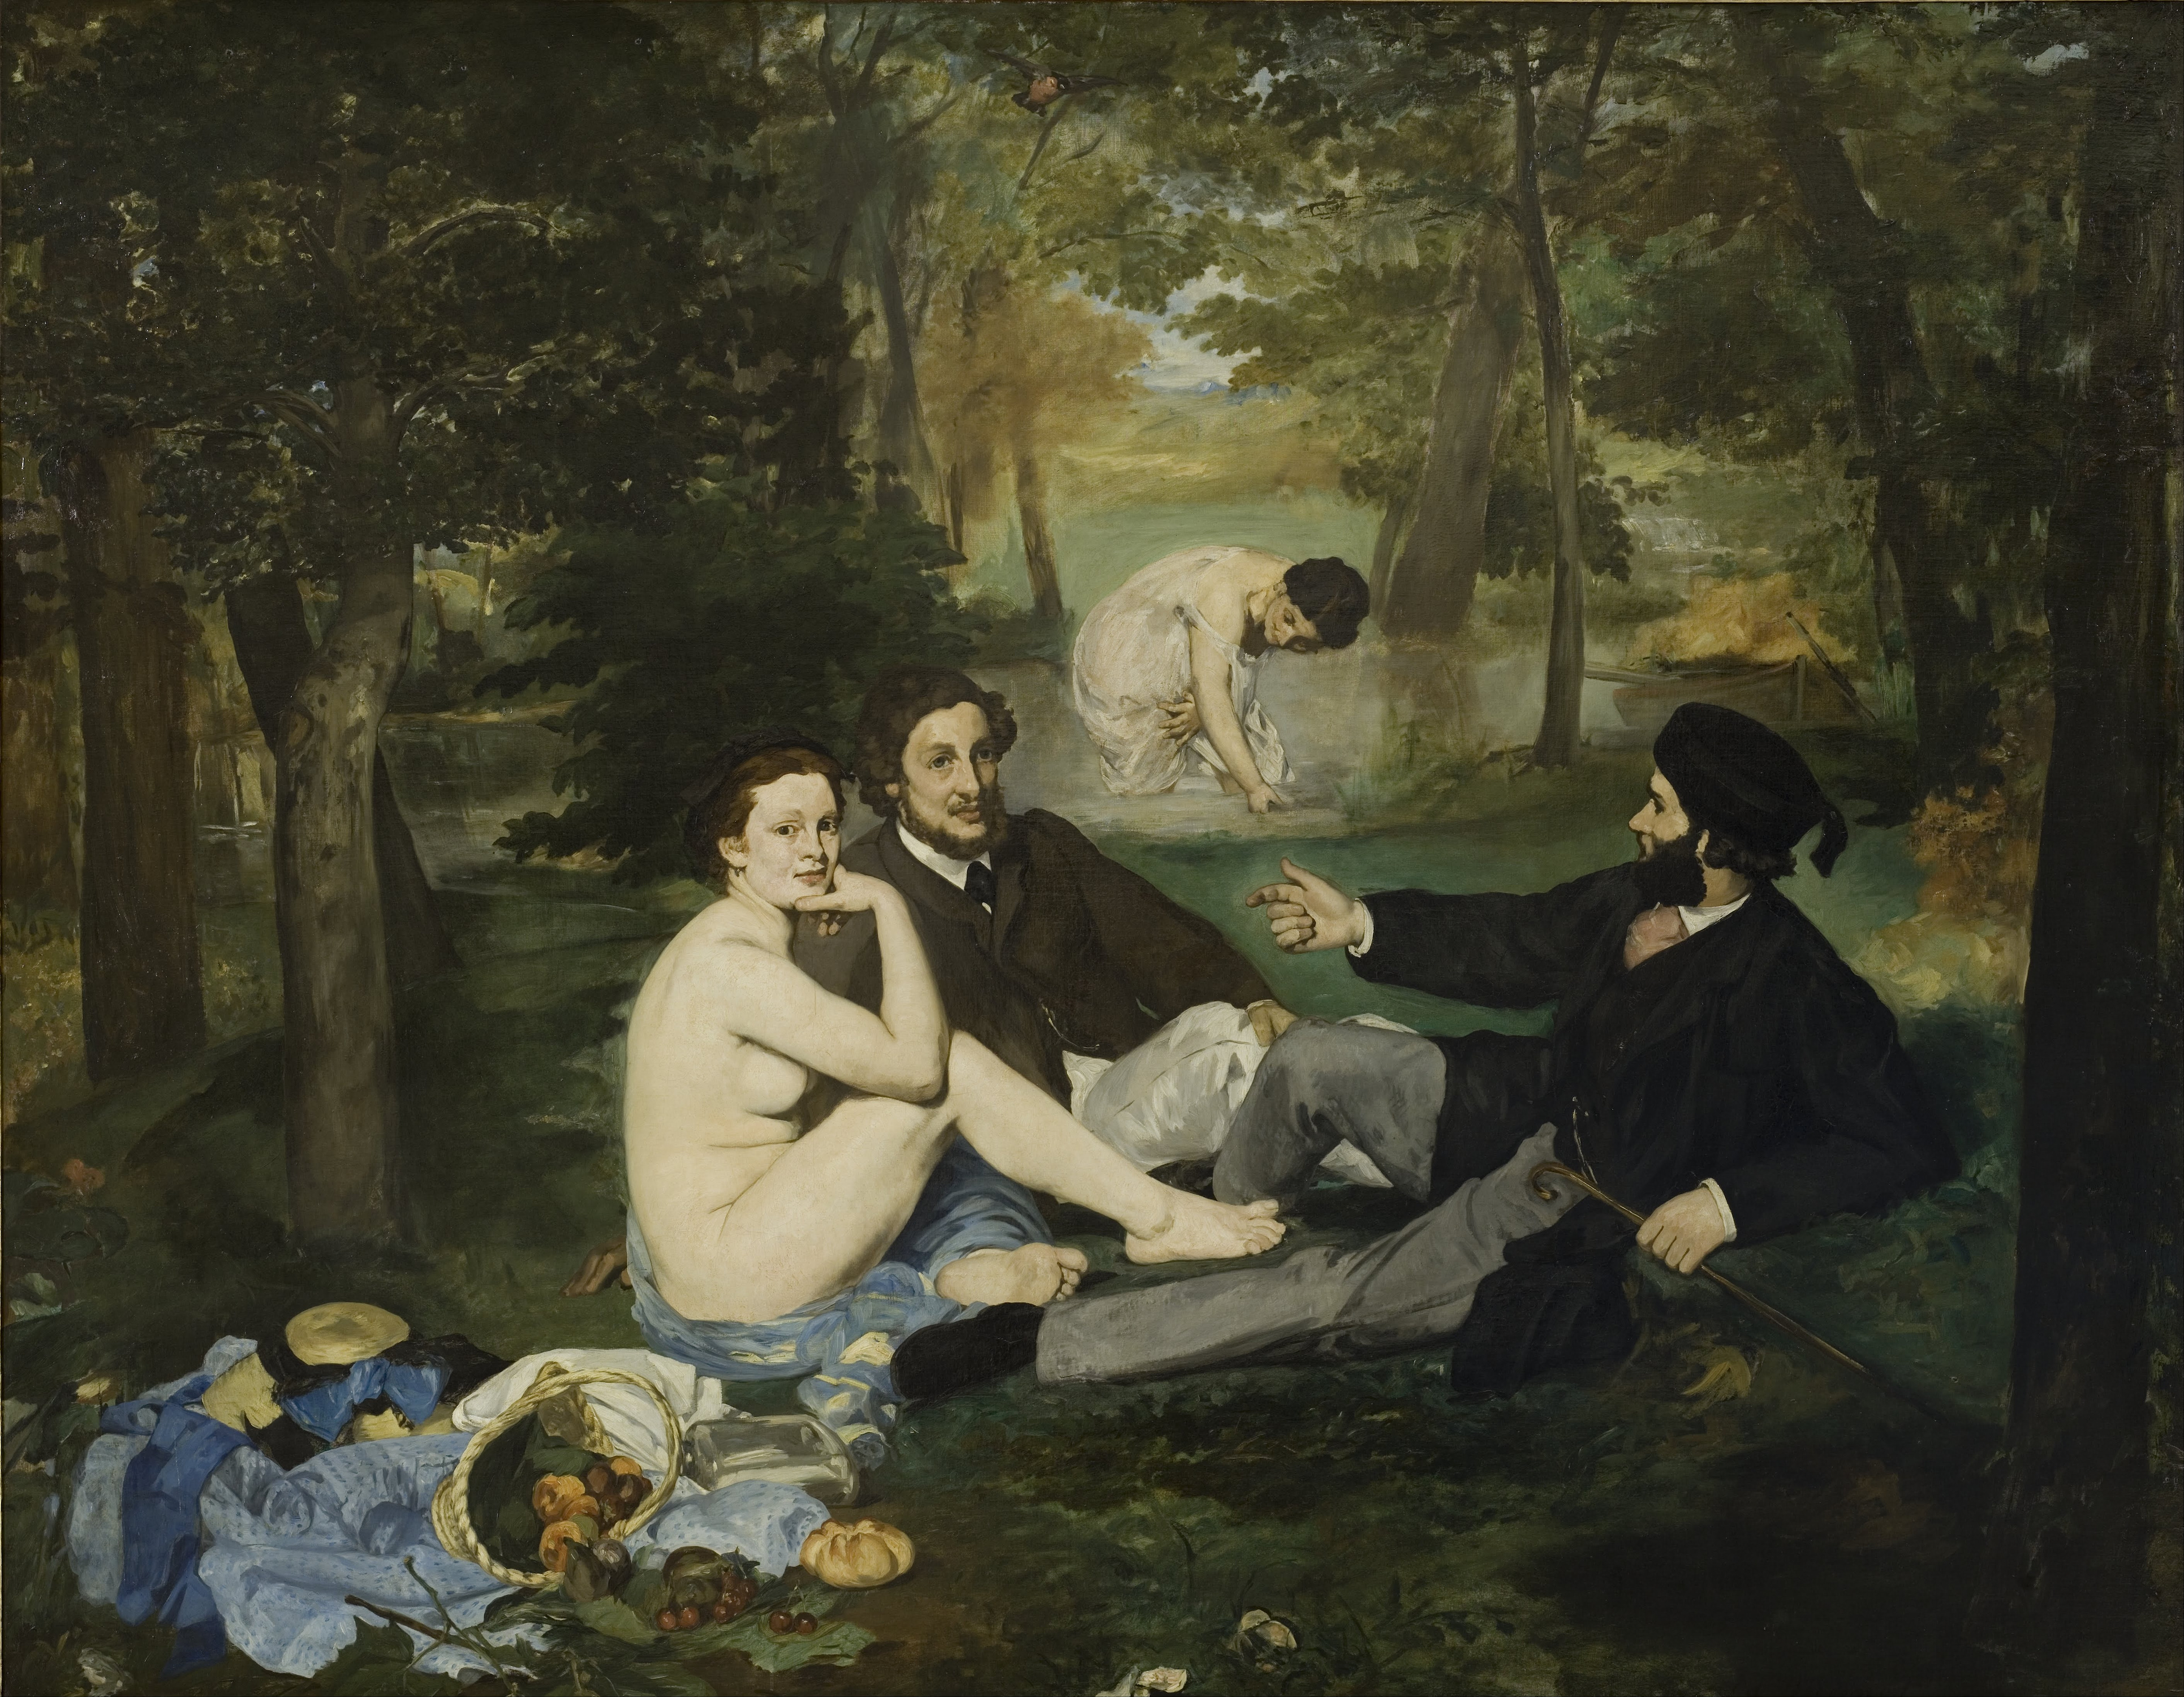 Обед на траве by Édouard Manet - 1862-1863 - 208 × 265 см 